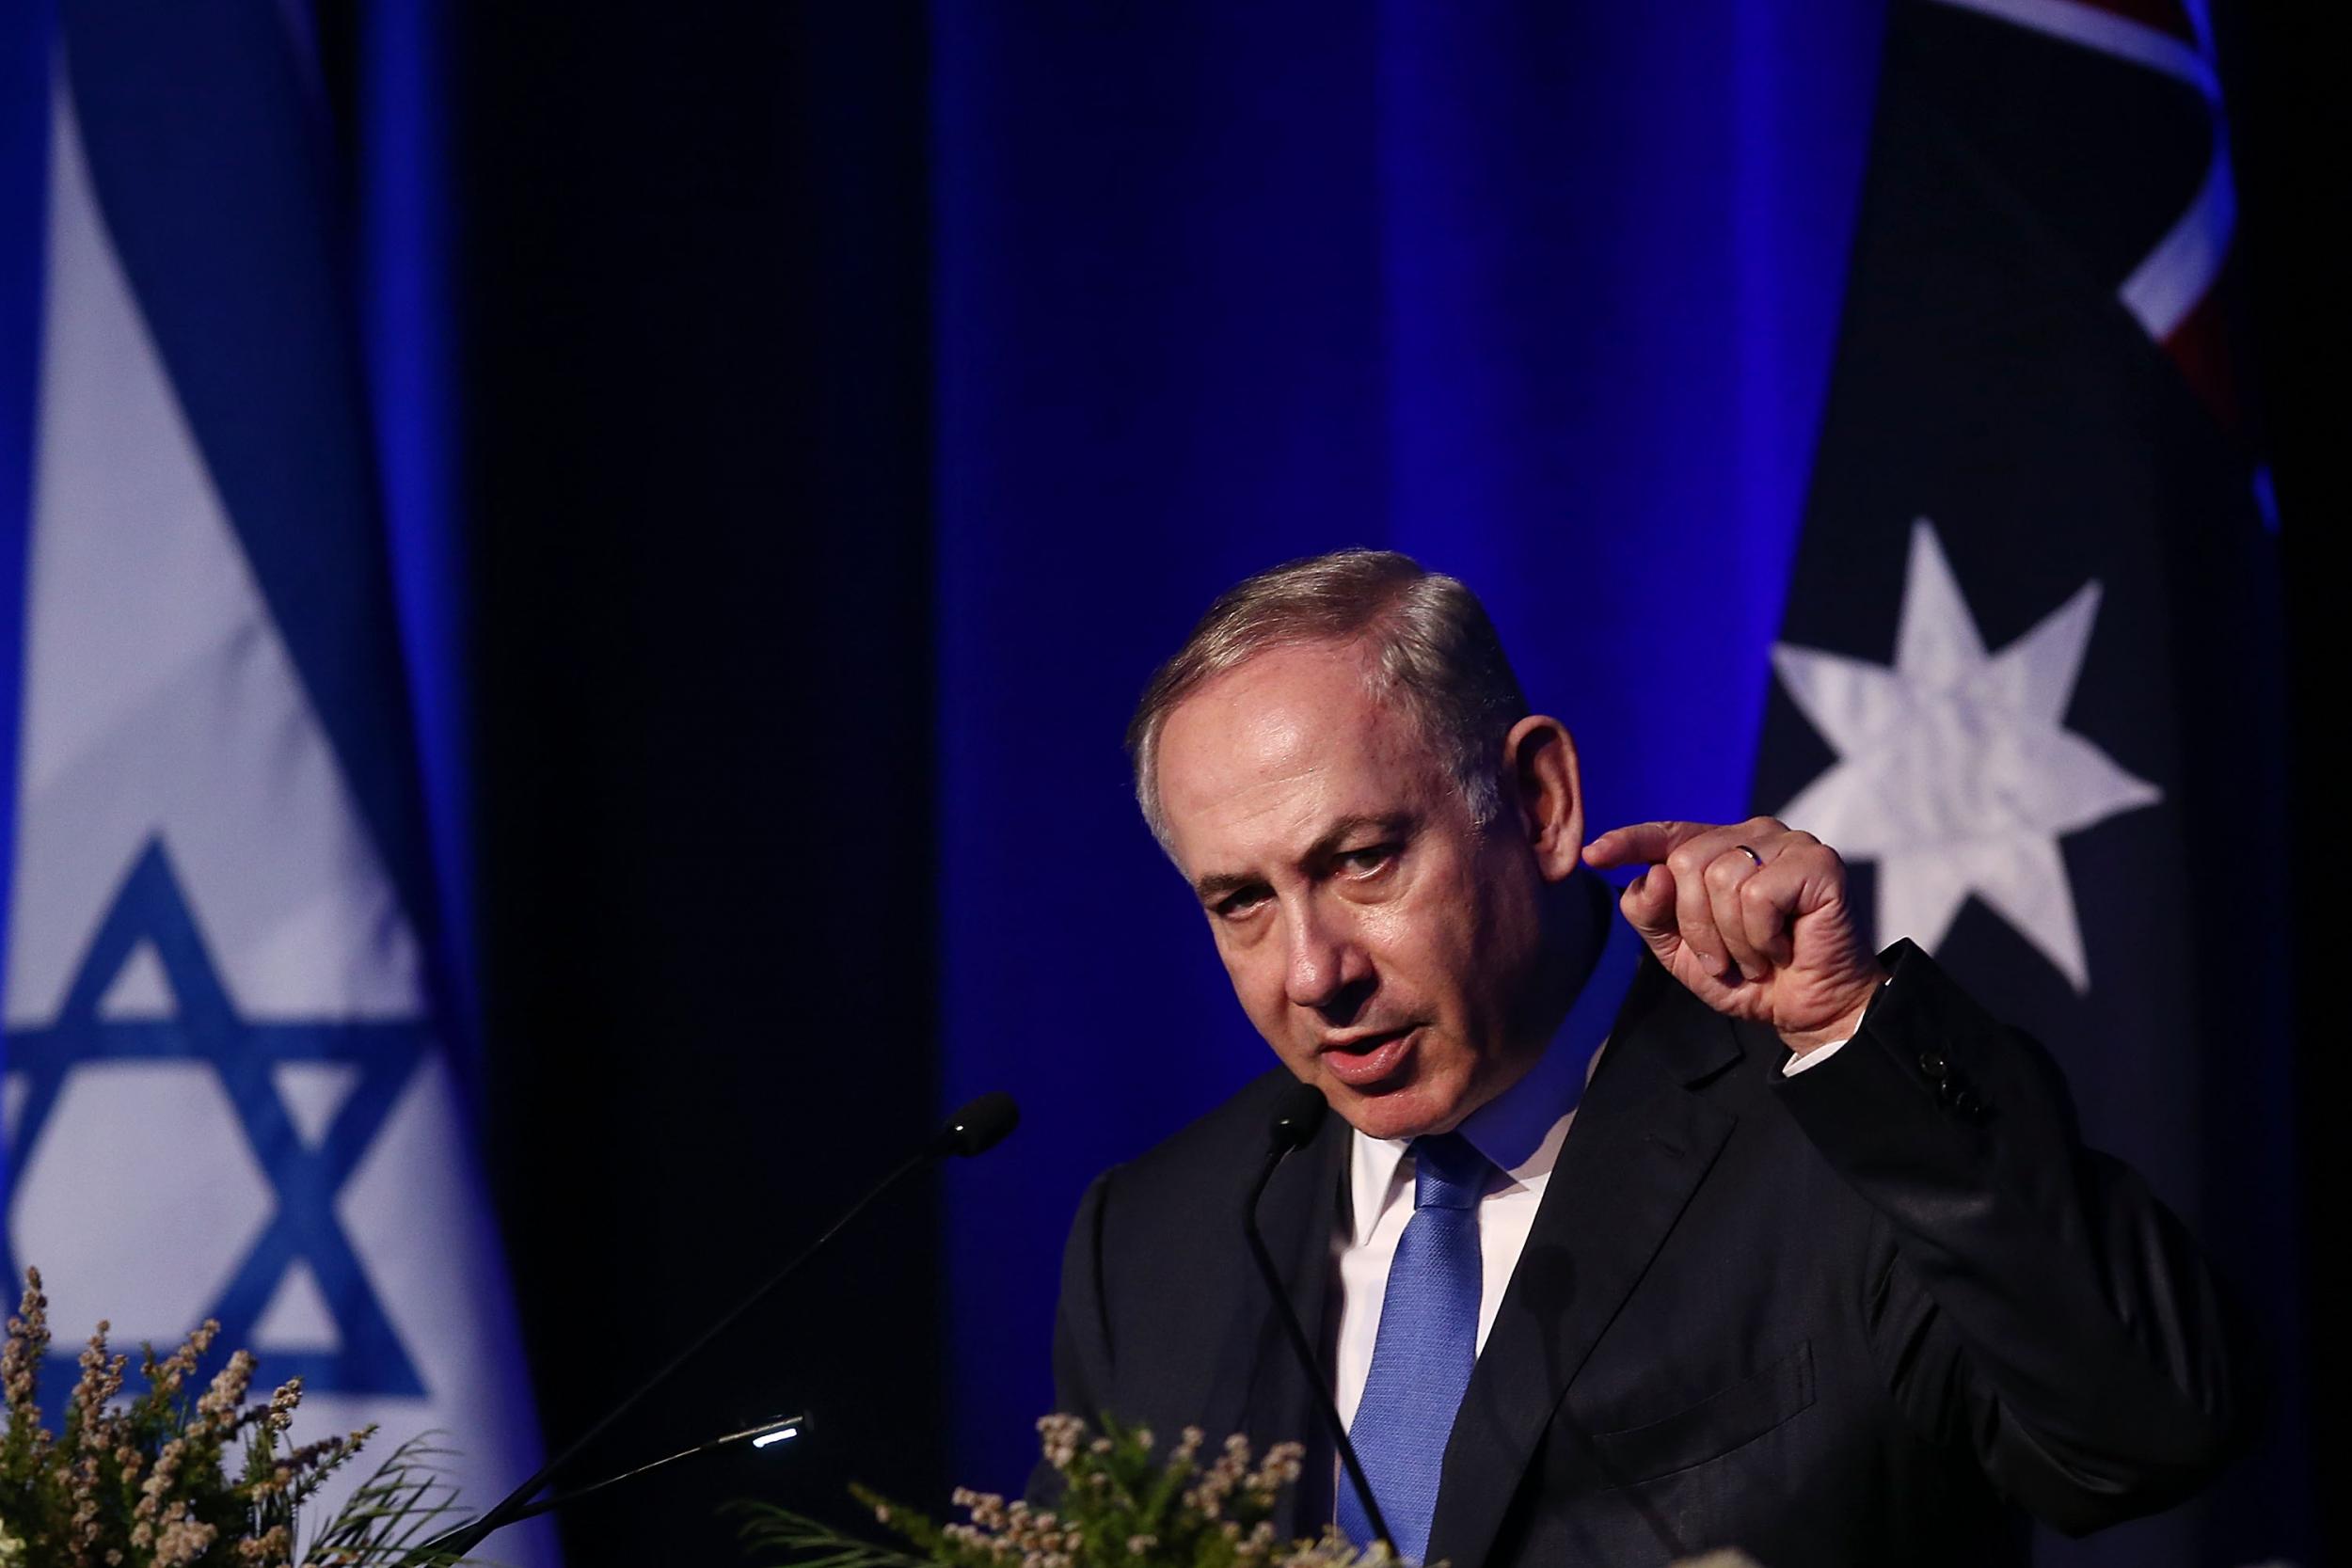 Israeli Prime Minister Benjamin Netanyahu speaks at Sydney's International Convention Centre on February 22, 2017